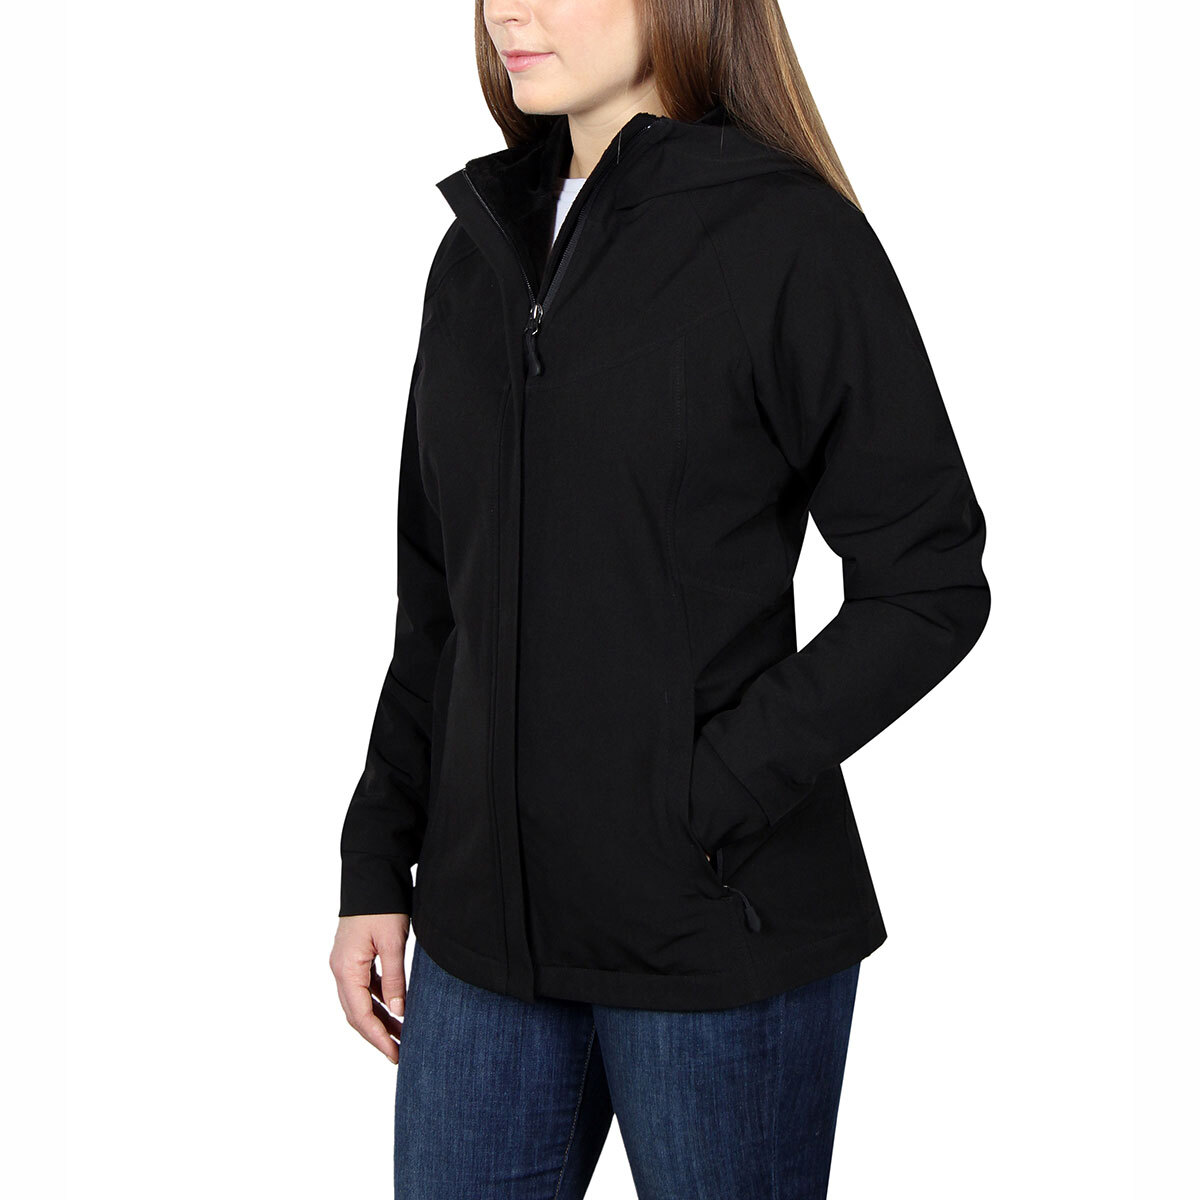 Kirkland Signature Women's Softshell Jacket in Black